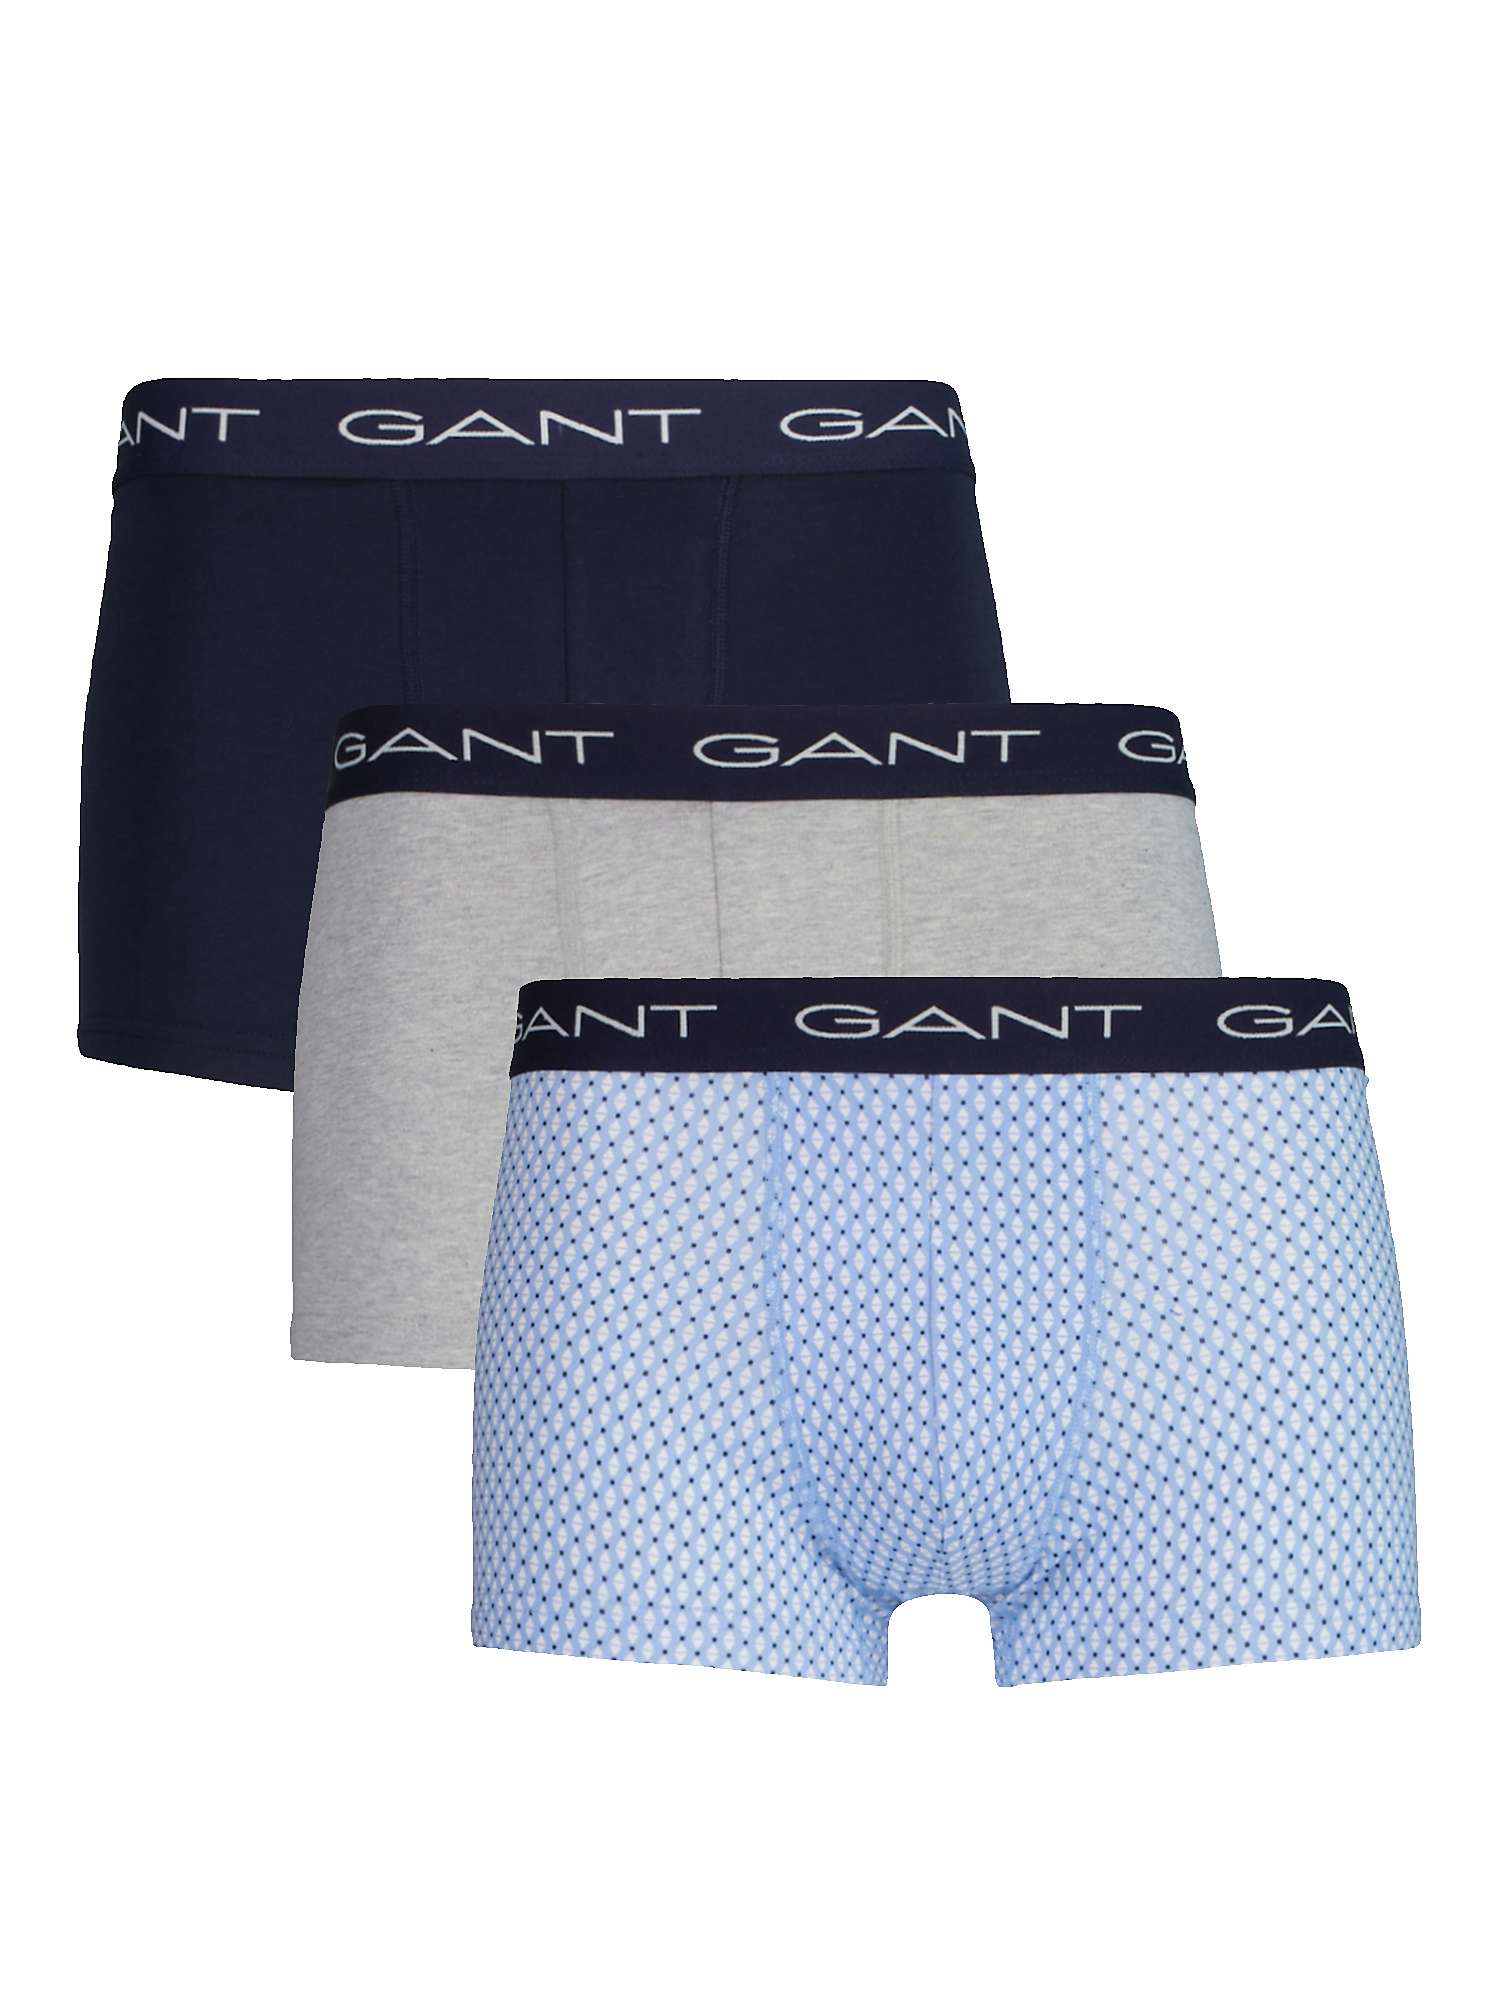 Buy GANT Micro Print Trunks, Pack of 3, Blue Online at johnlewis.com